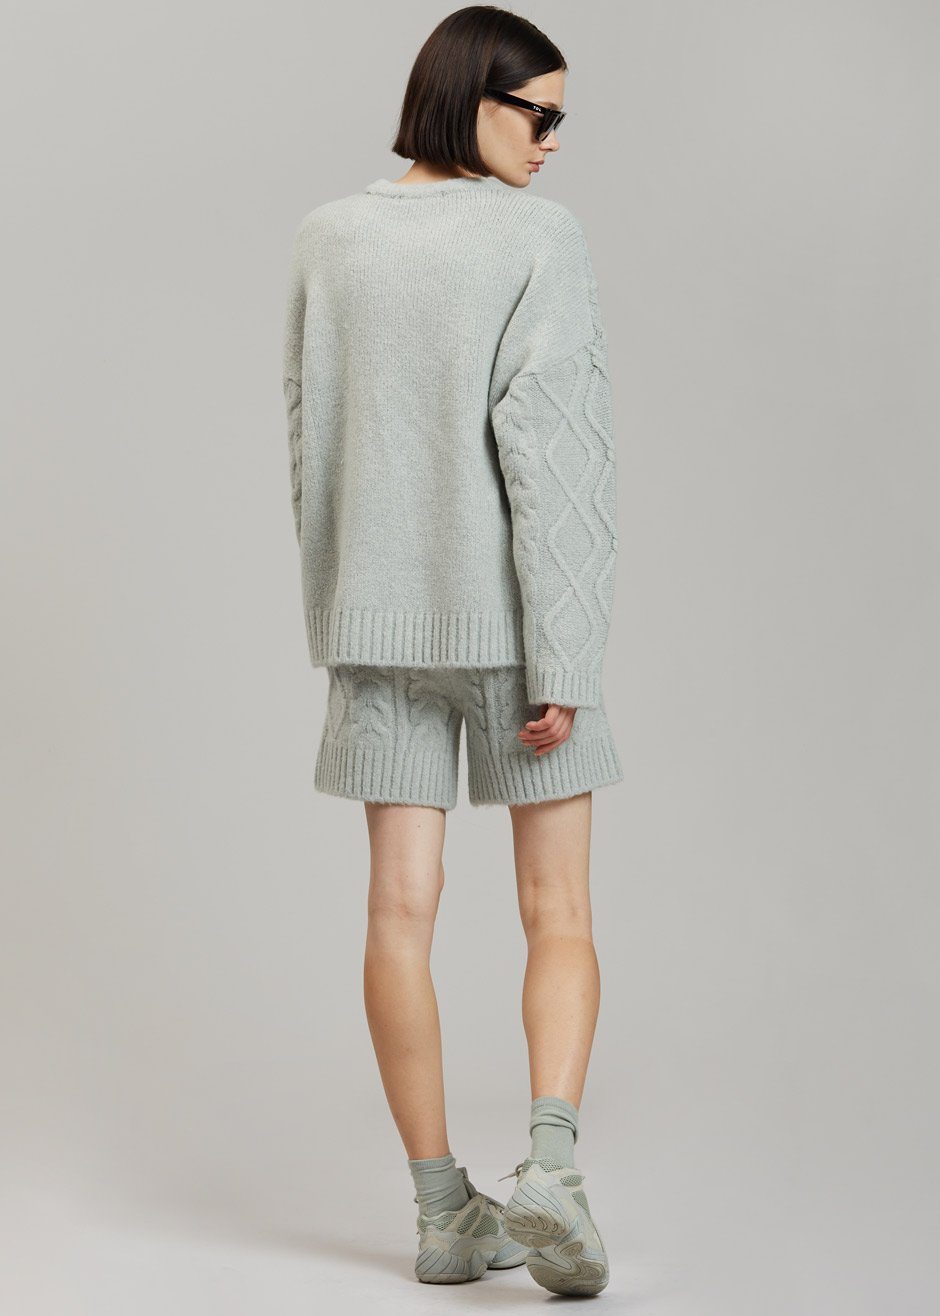 Eira Knit Shorts - Celadon - 8